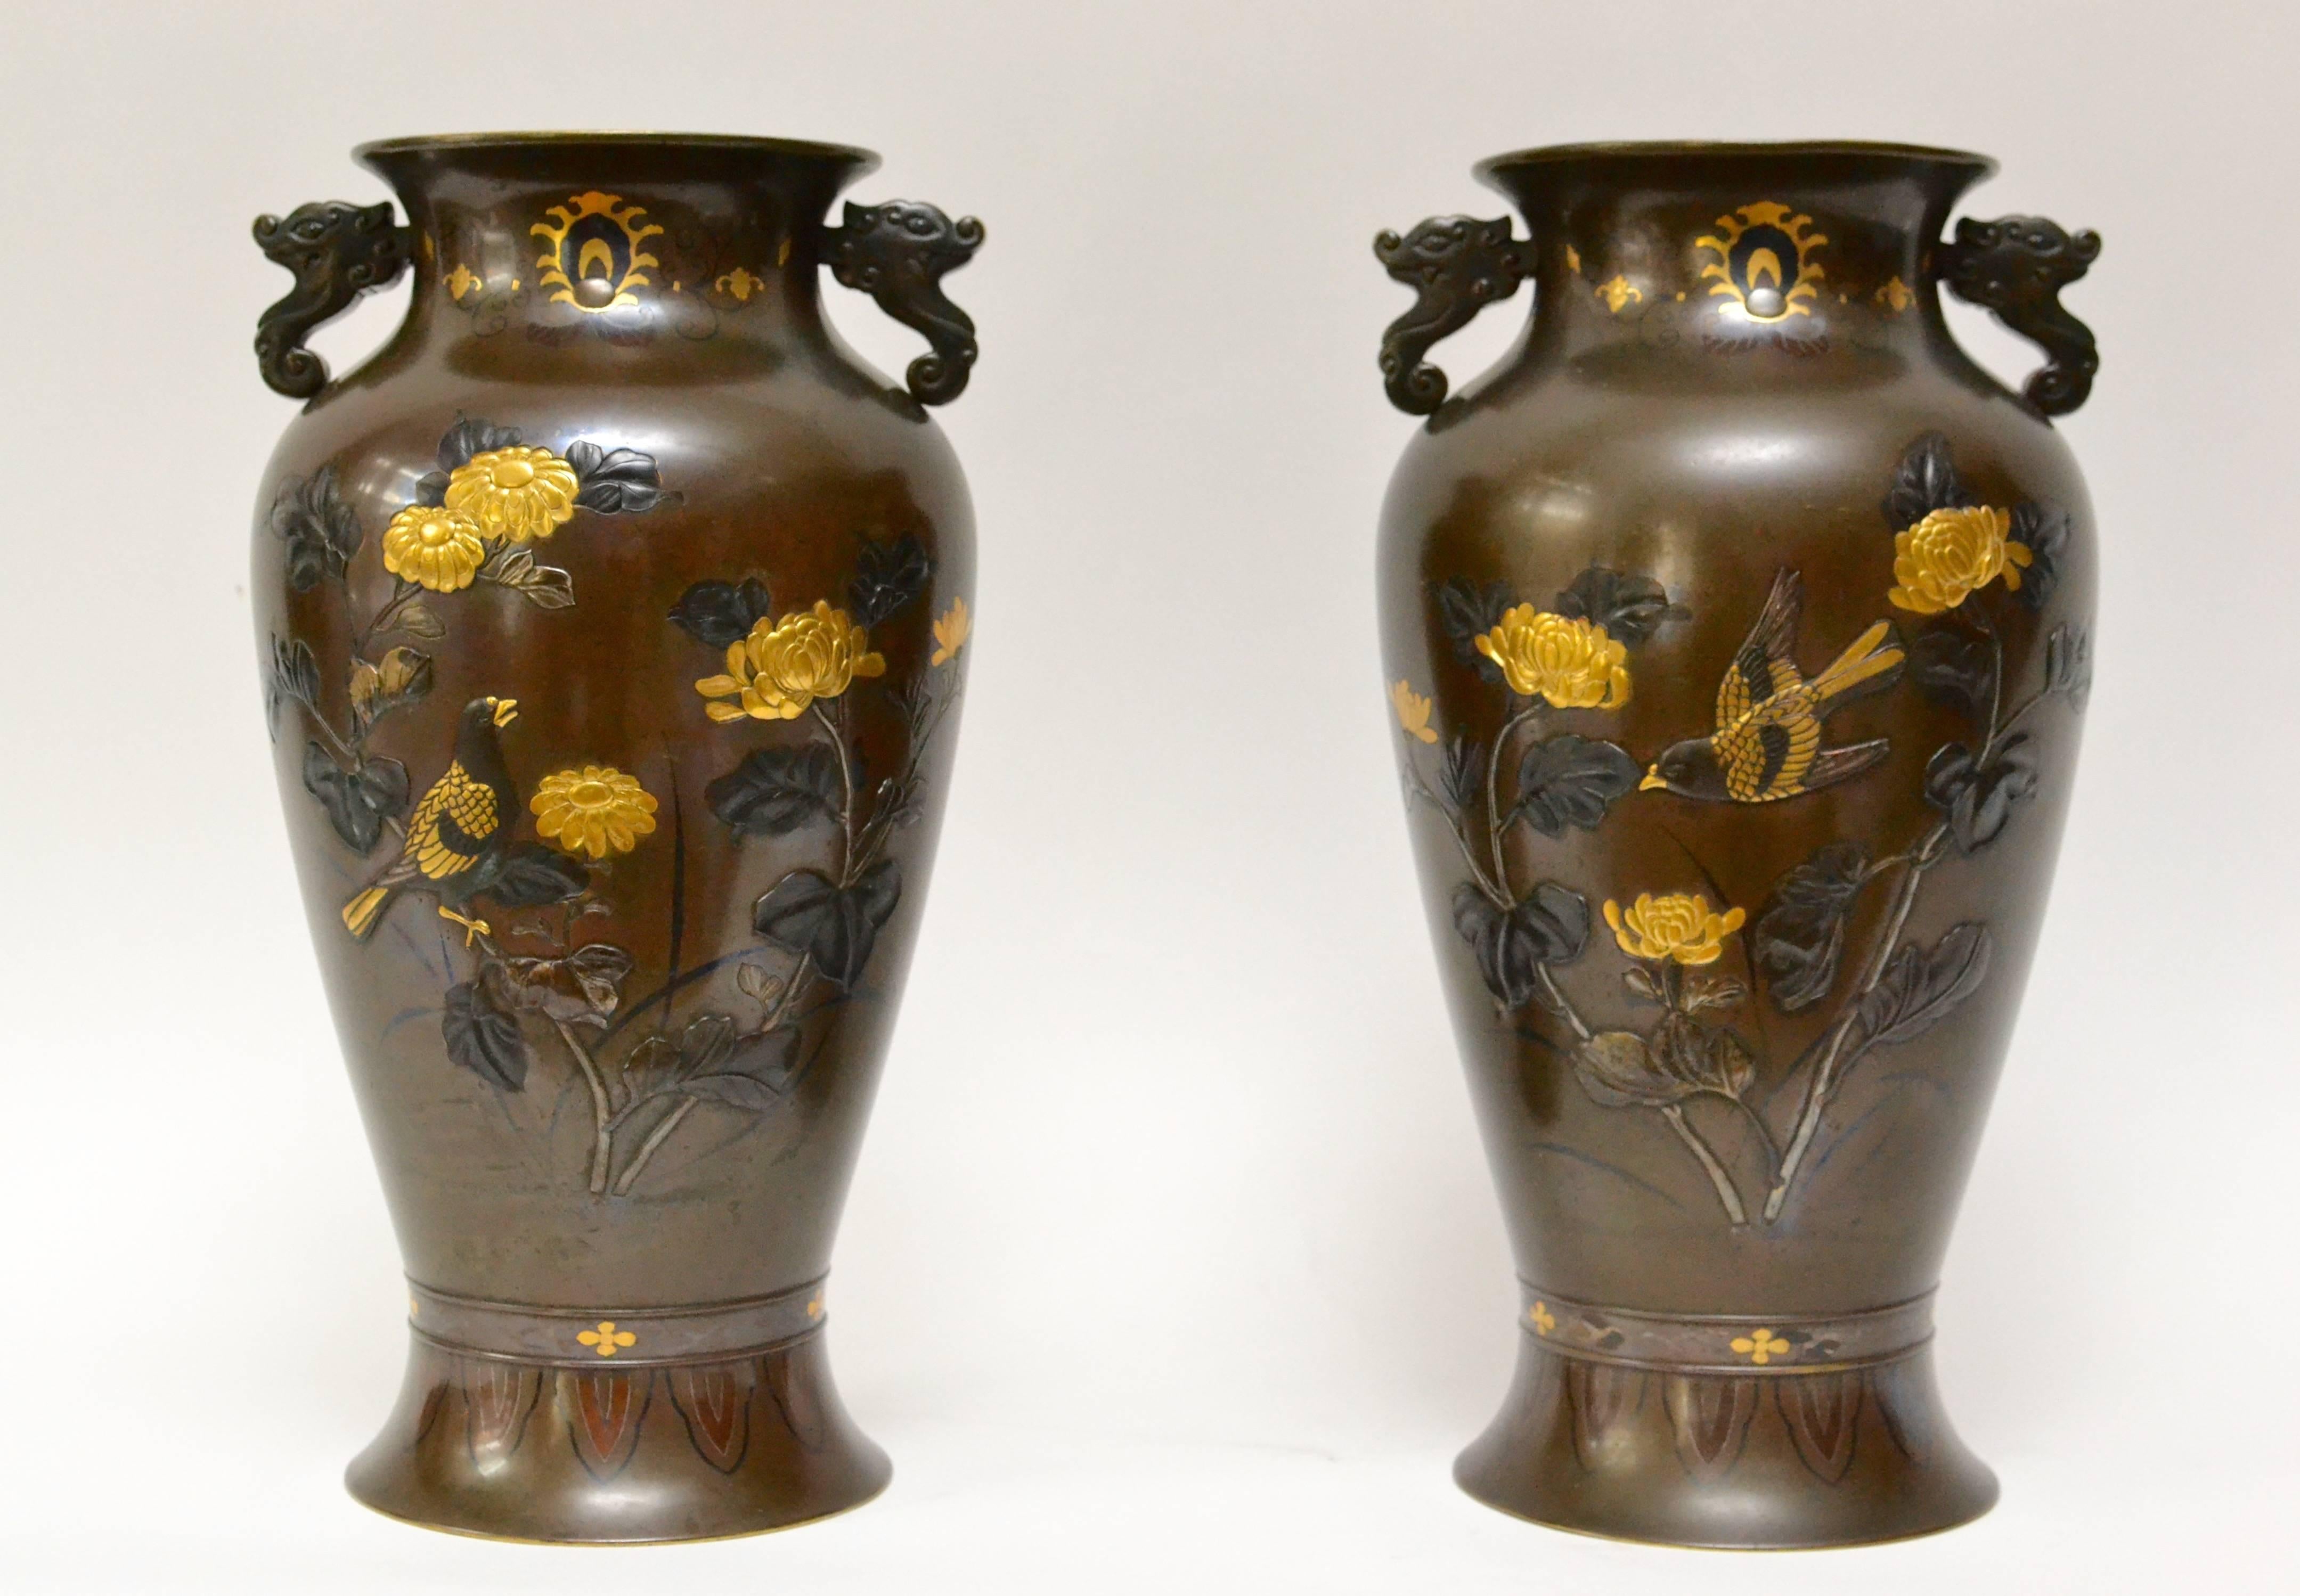 Pair of Japanese Meiji Mixed Metal Relief Vases